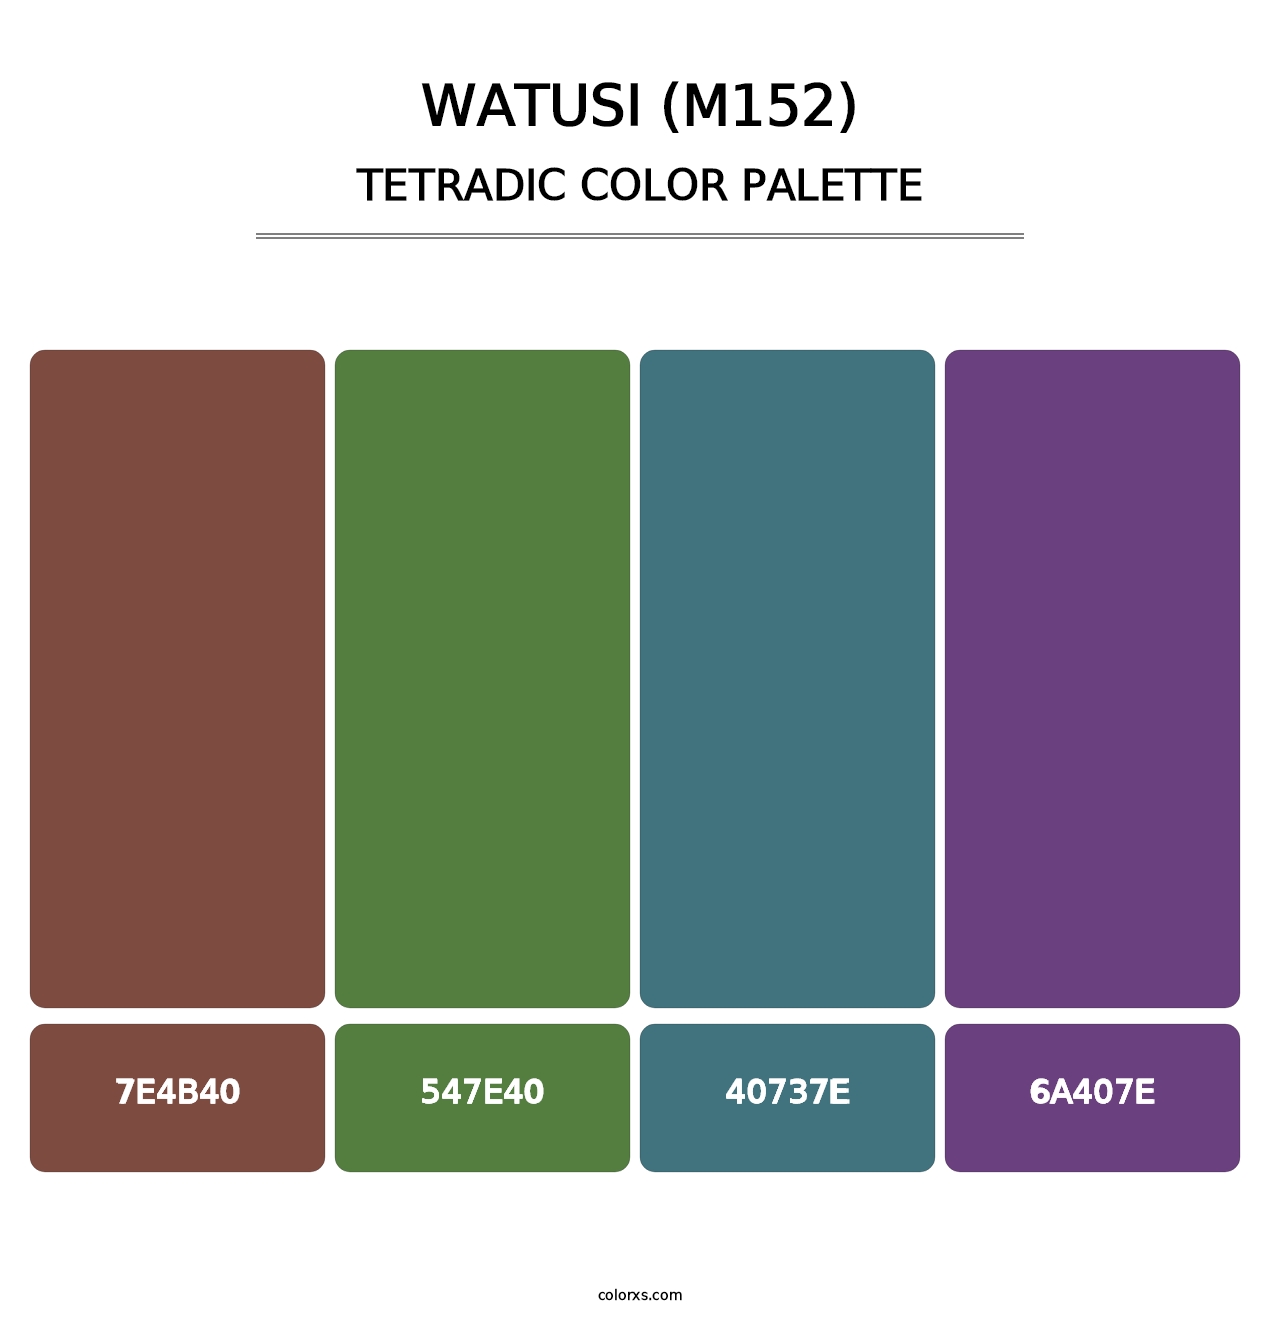 Watusi (M152) - Tetradic Color Palette